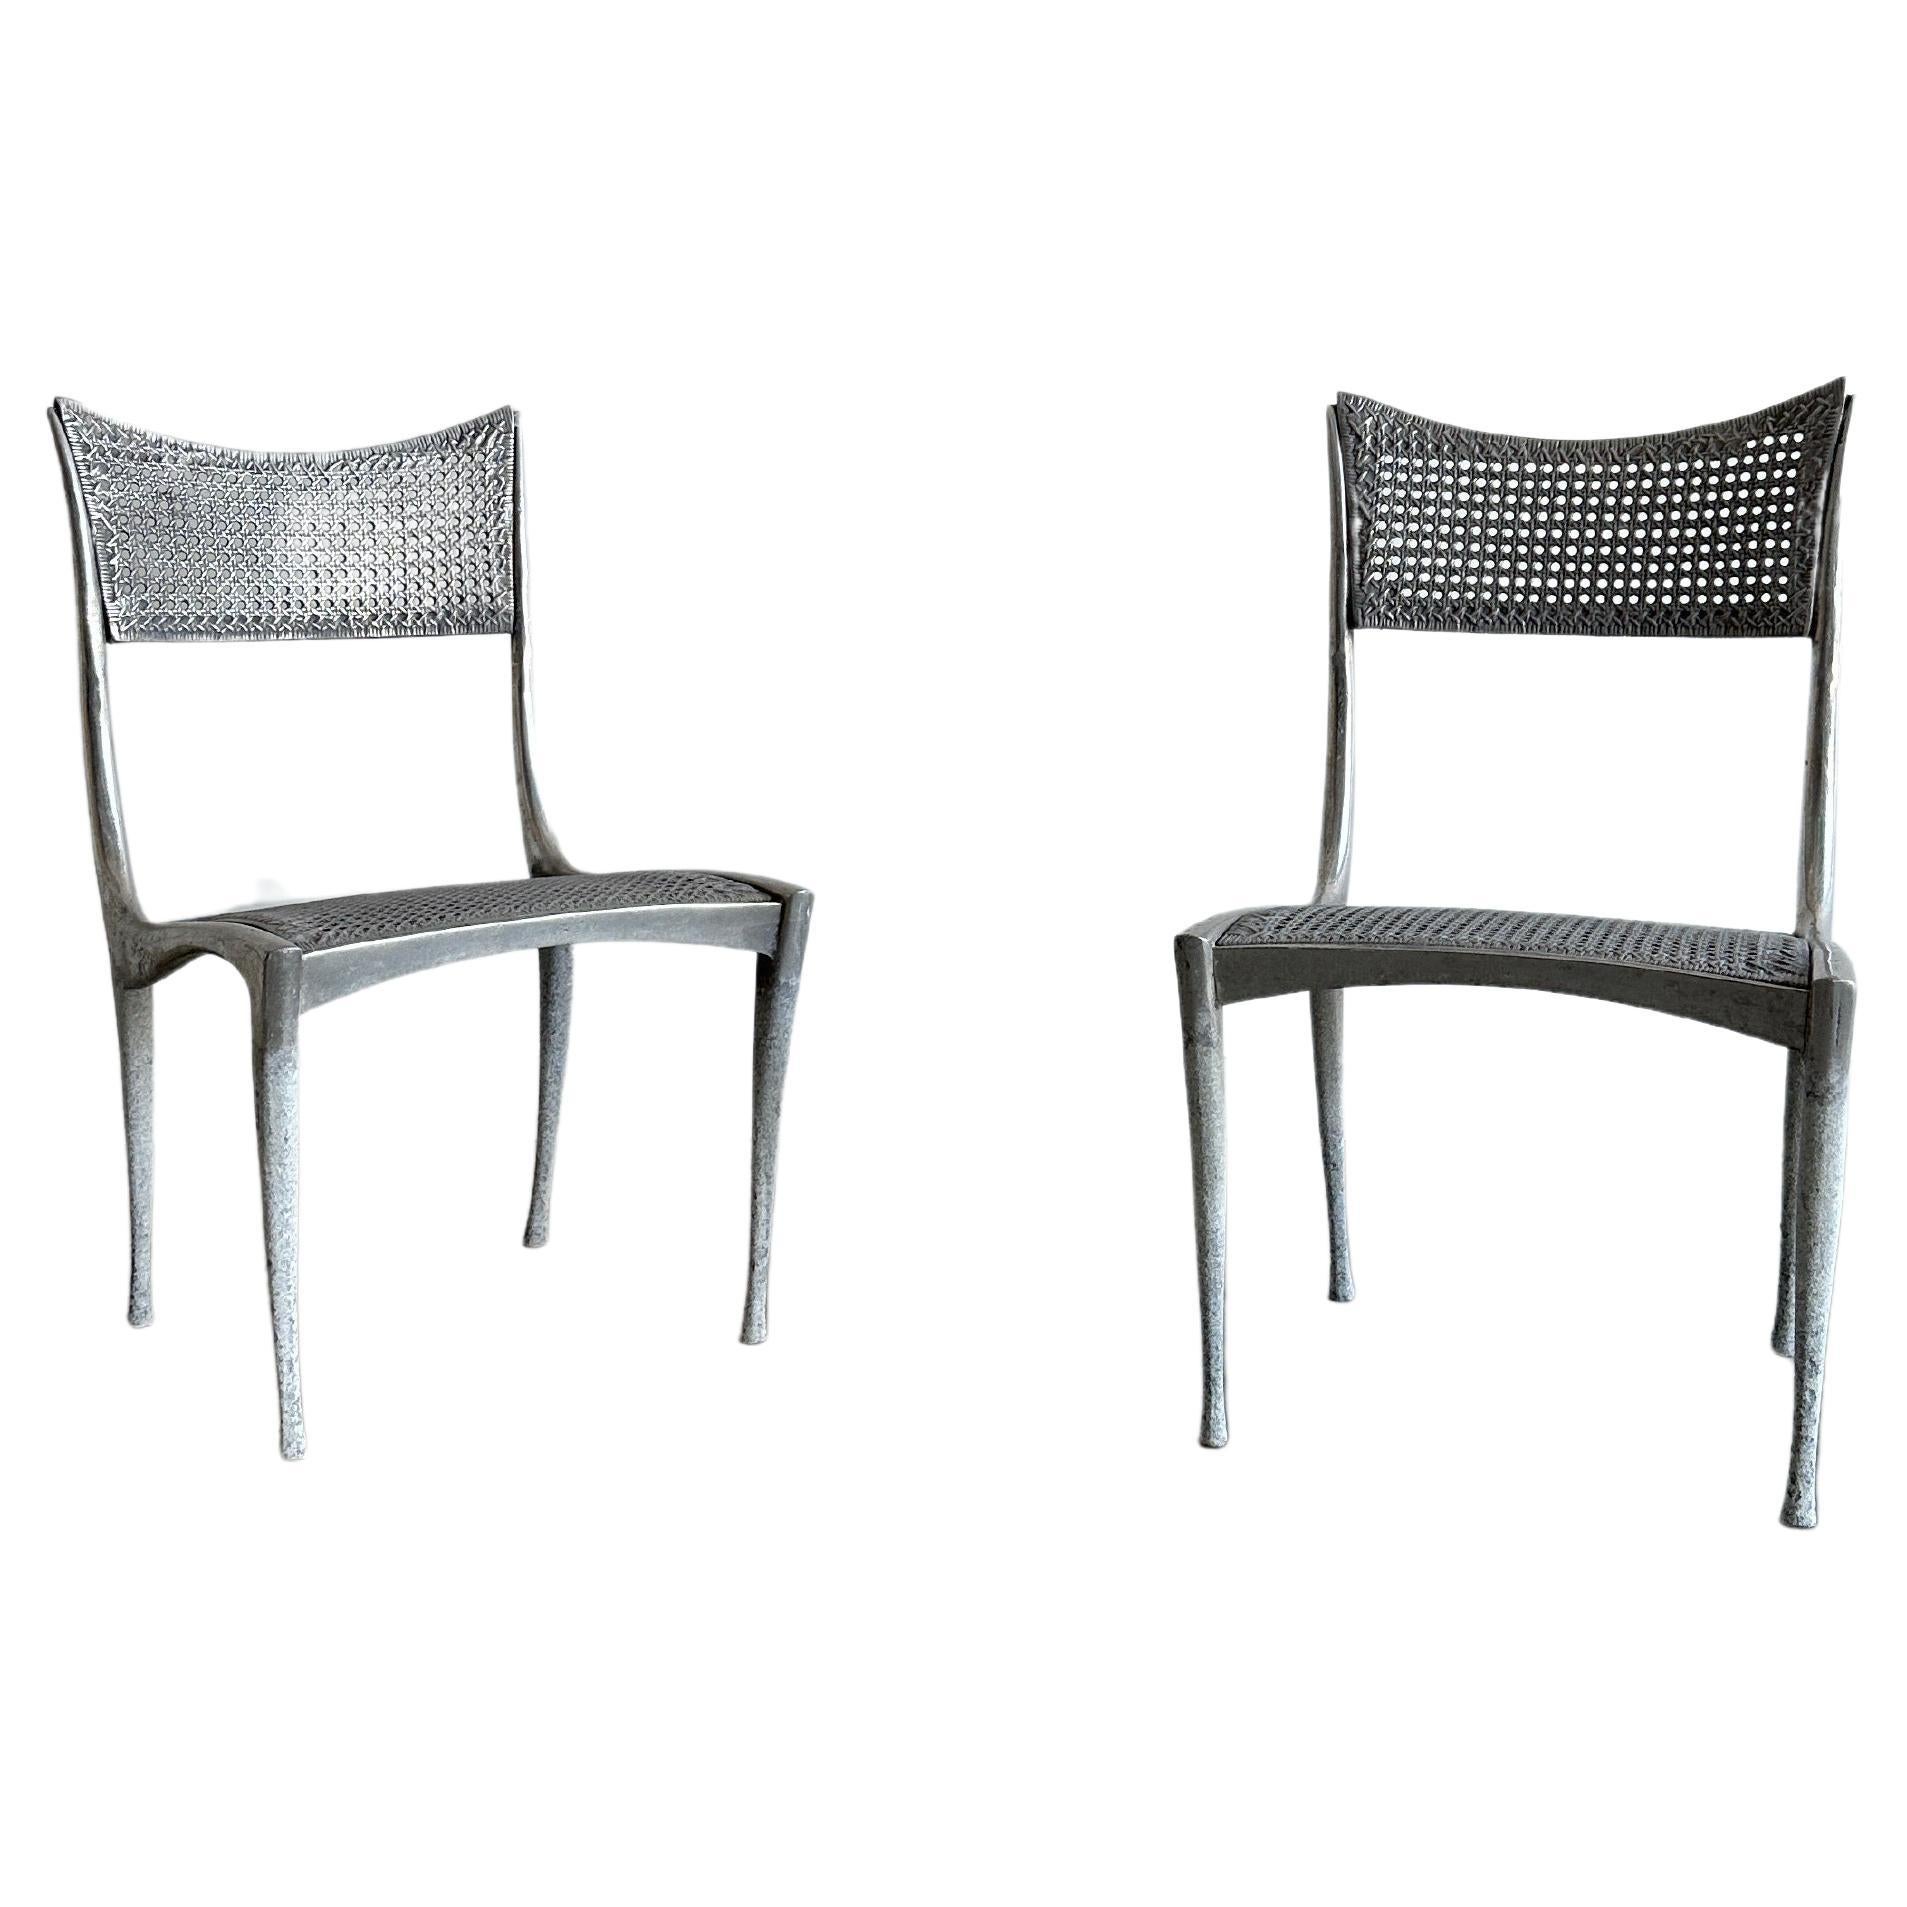 Pair of Gazelle 10B chairs in all cast aluminium by Dan Johnson